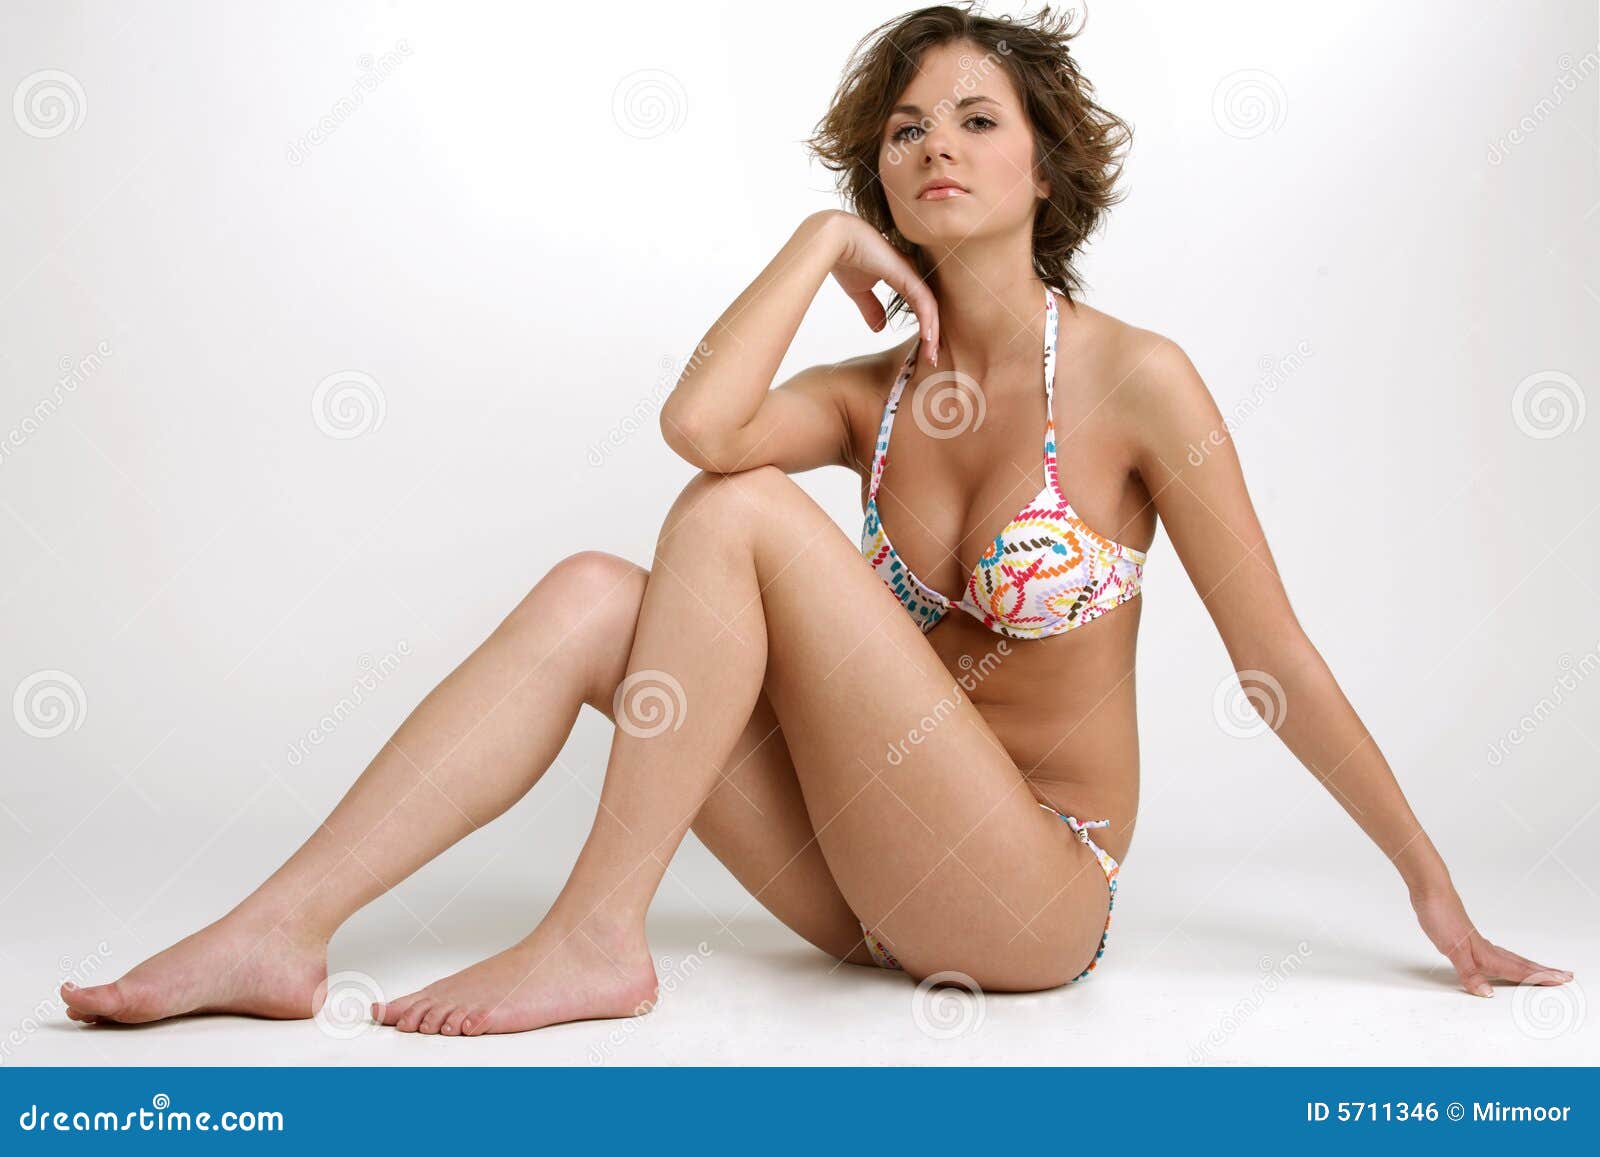 bikini brunette girl in photo